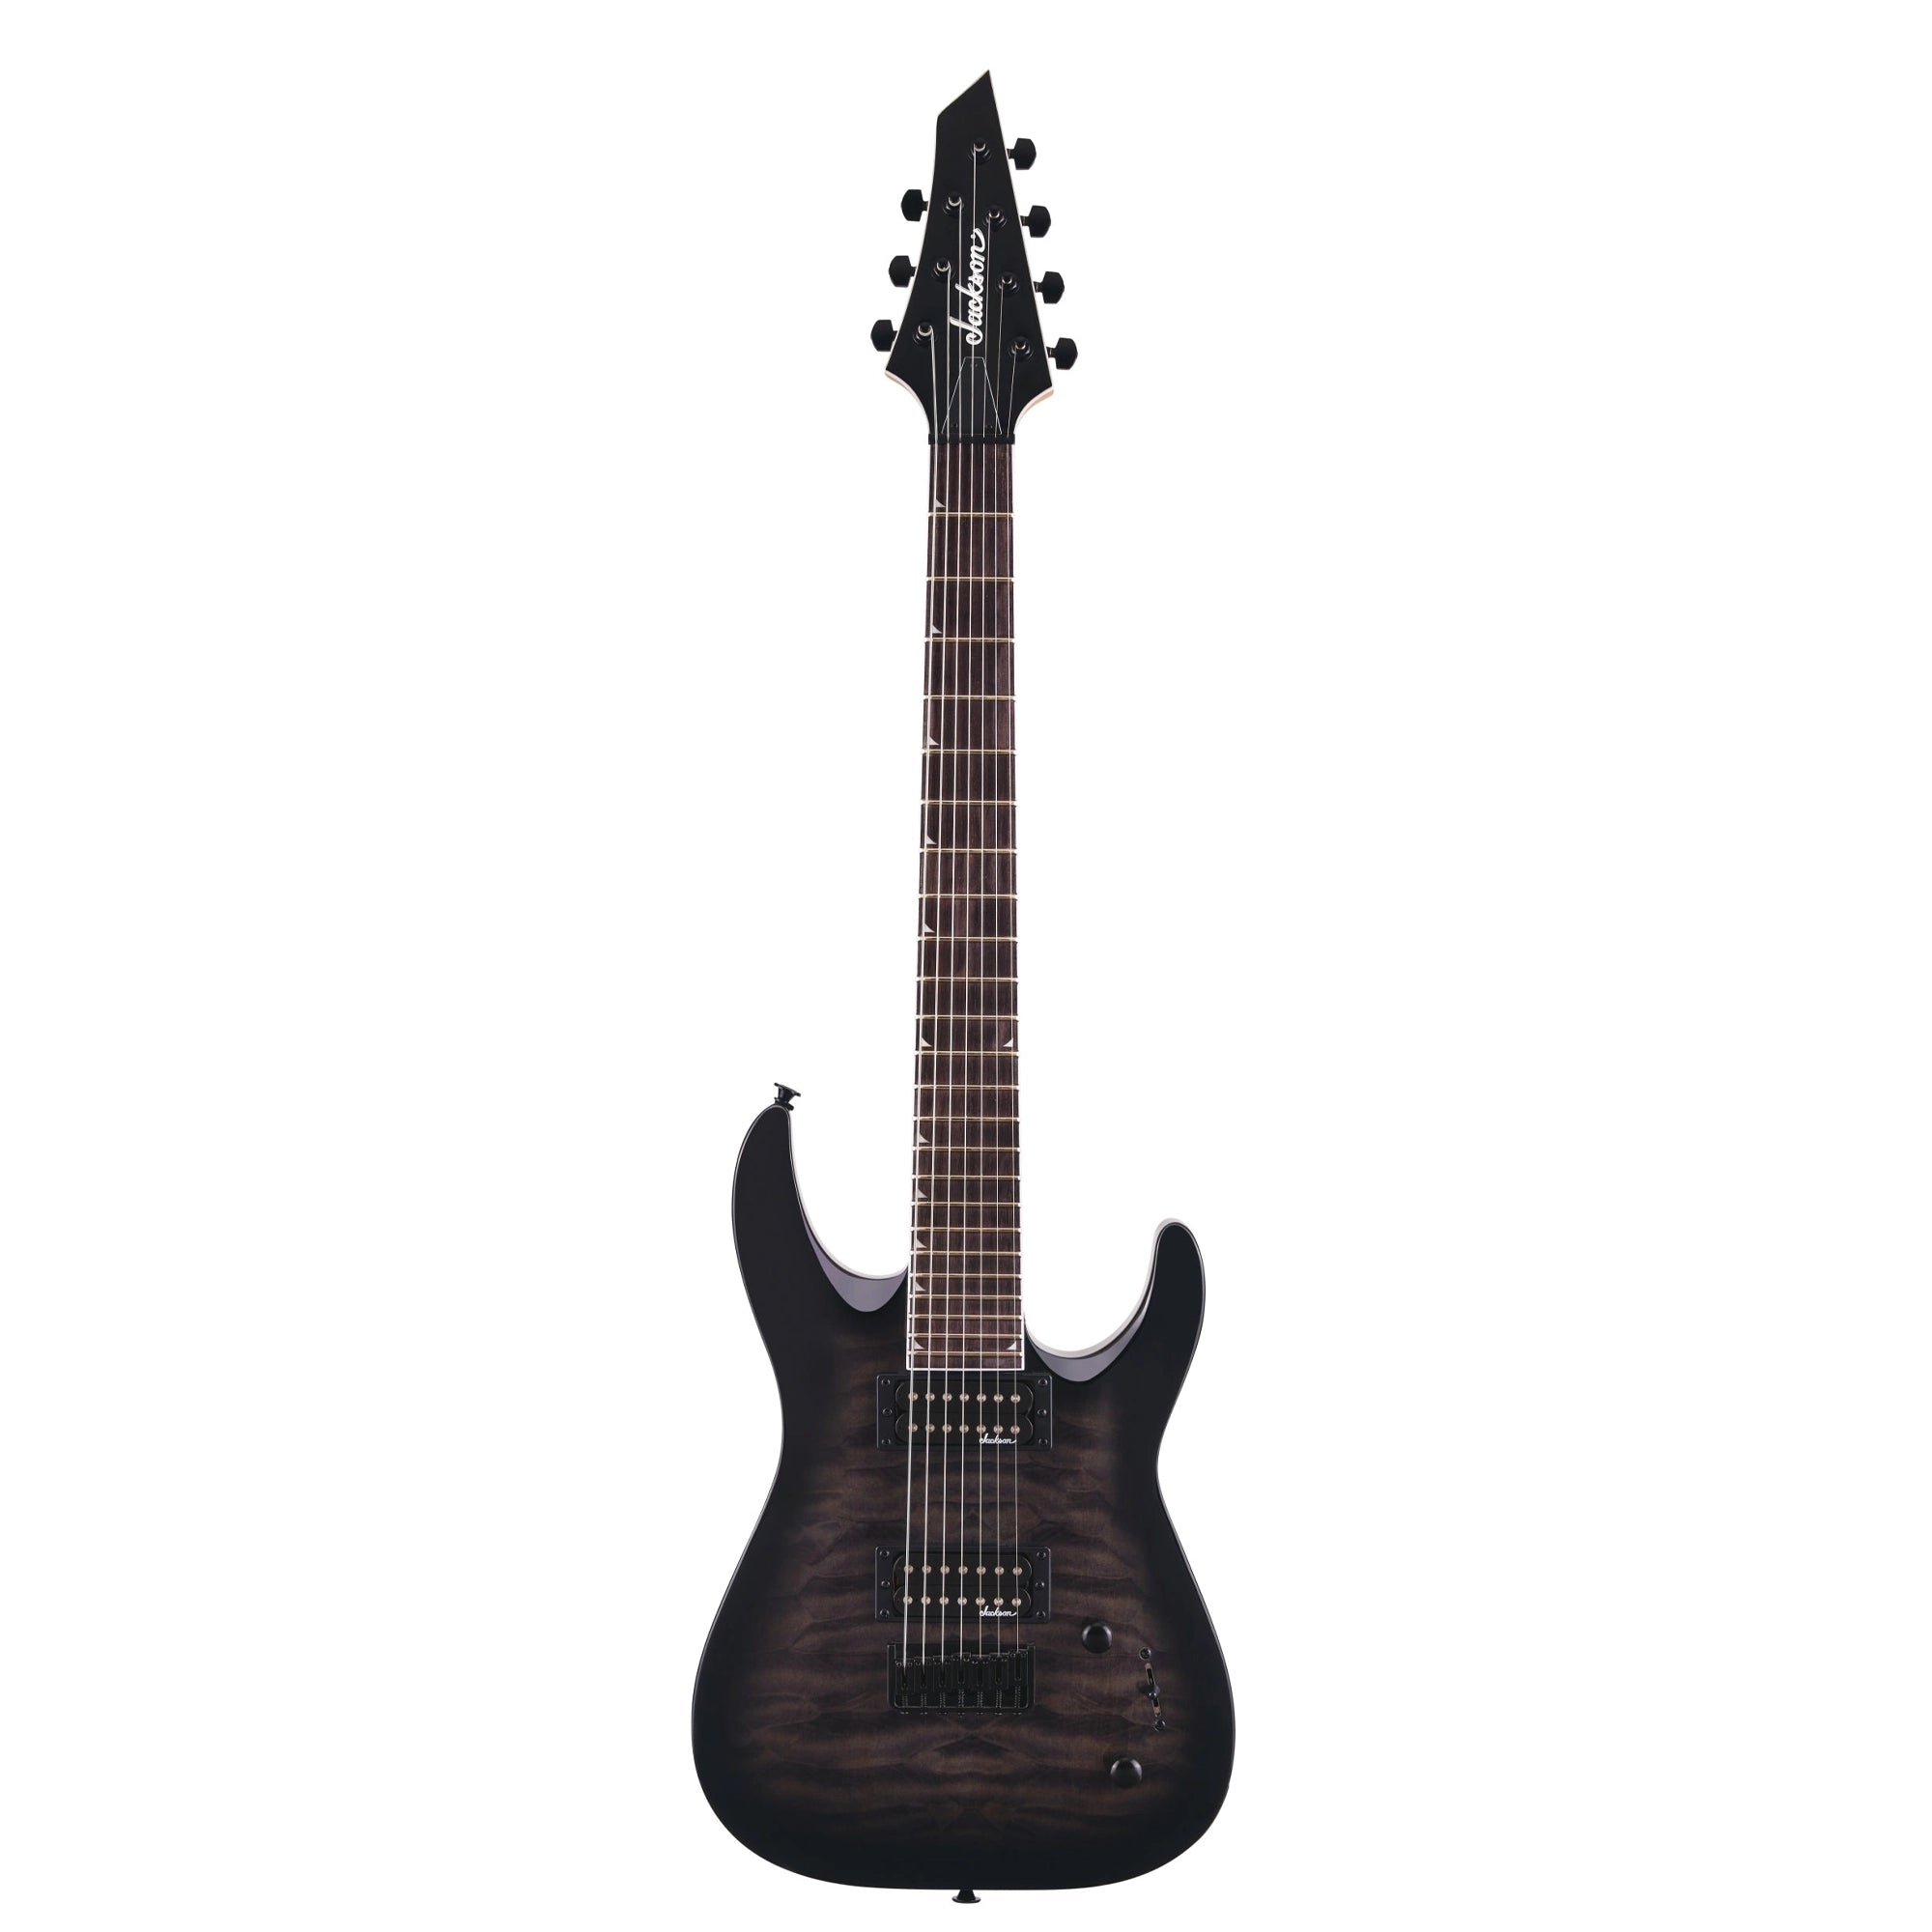 Jackson Js Series Dinky Arch Top JS22Q-7 Dka Ht 7-String Electric Guitar - Transparent Black Burst